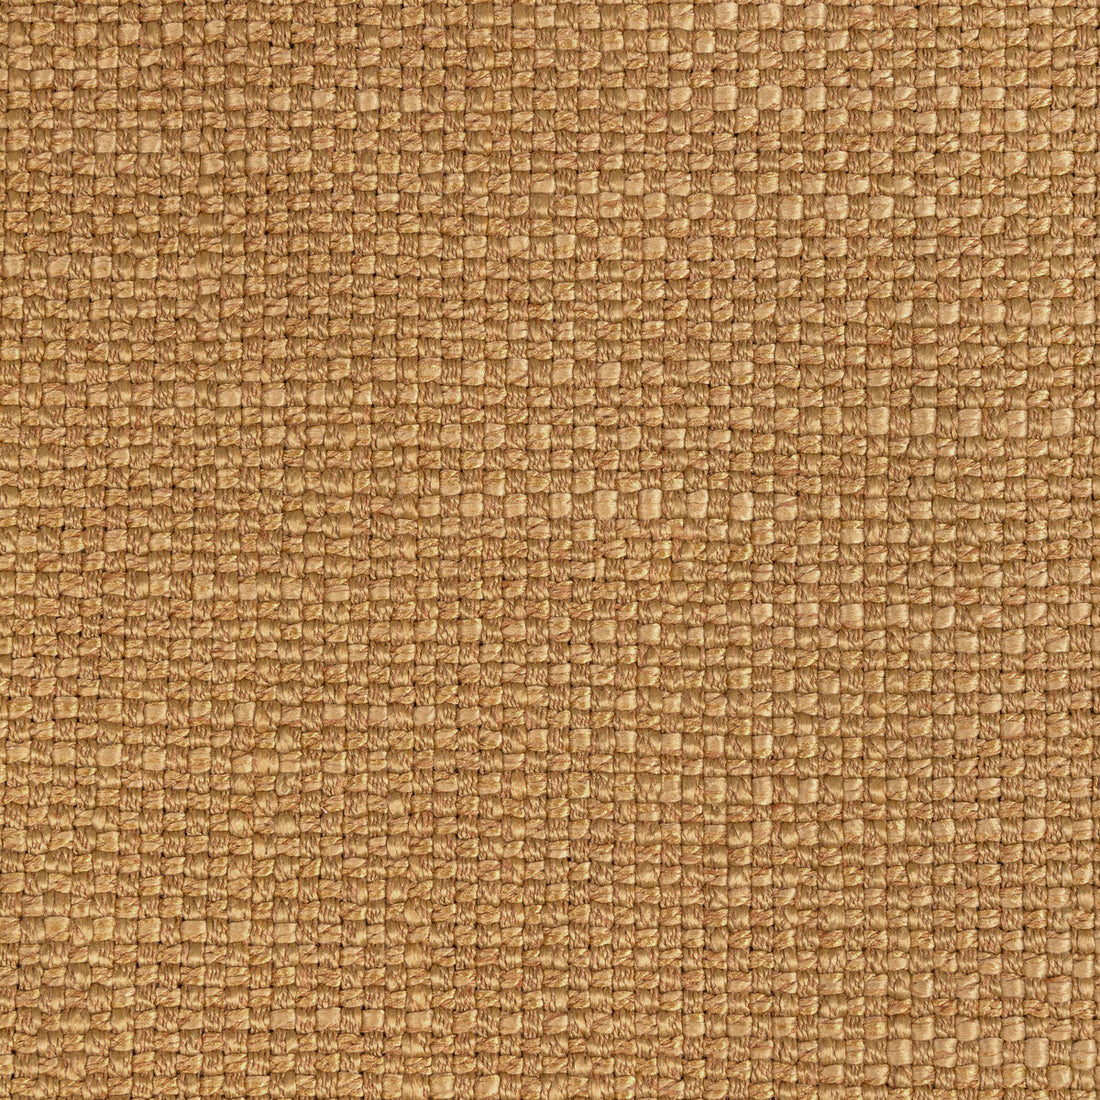 Kravet Design fabric in 36594-4 color - pattern 36594.4.0 - by Kravet Design in the Performance Kravetarmor collection